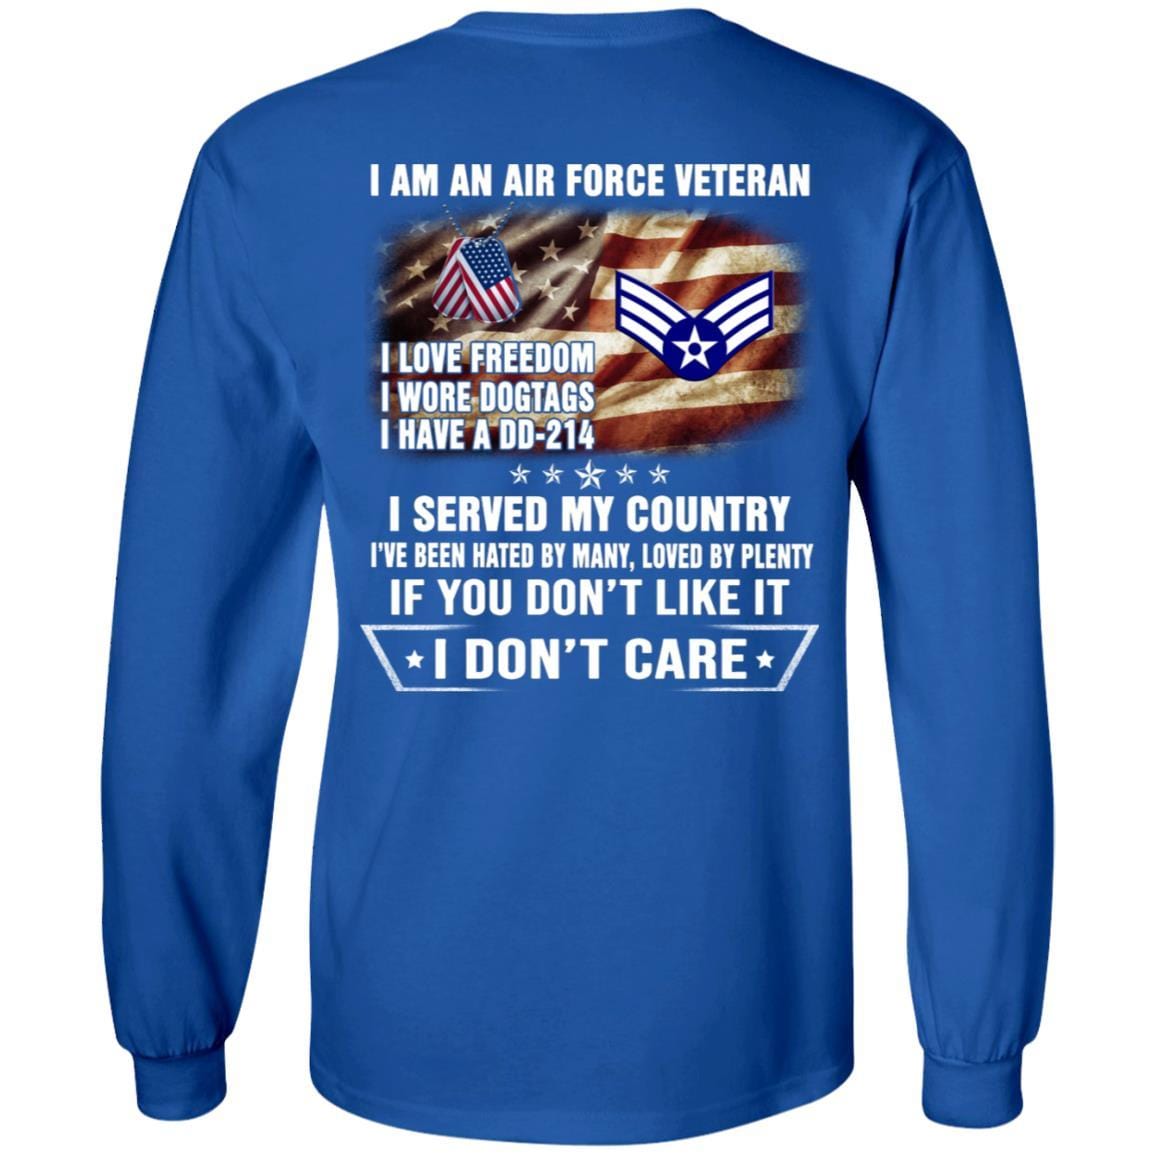 I Am An Air Force E-4 Senior Airman SrA E4 Enlisted Airman Ranks AF Rank Veteran T-Shirt On Back-TShirt-USAF-Veterans Nation